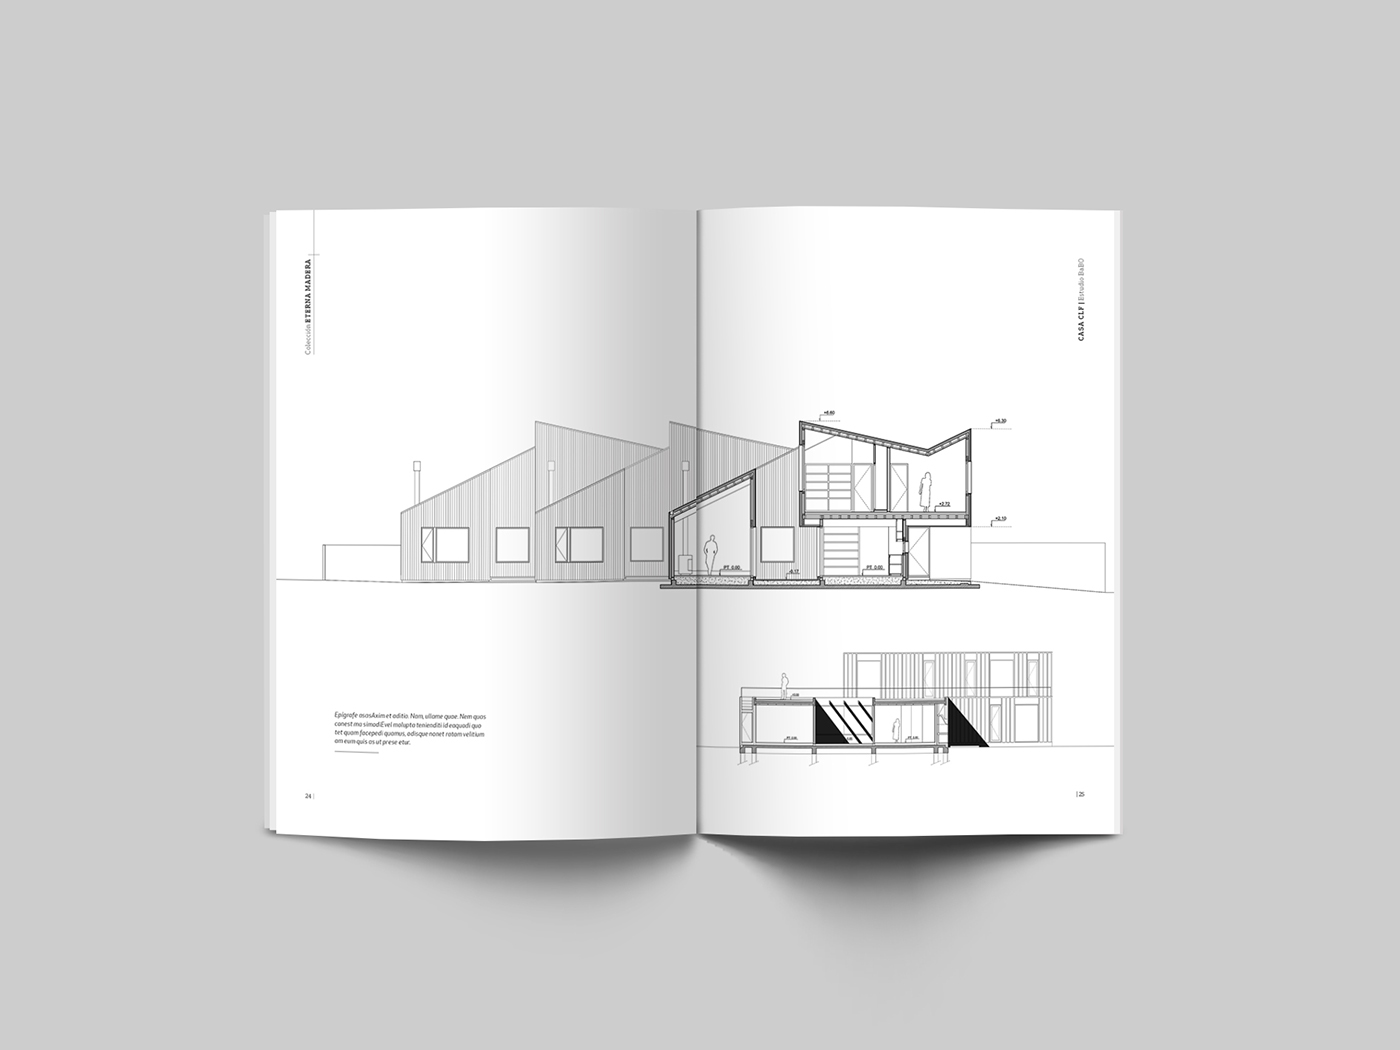 colección libro diseño editorial diseño gráfico argentina madera Pocket Book book Collection